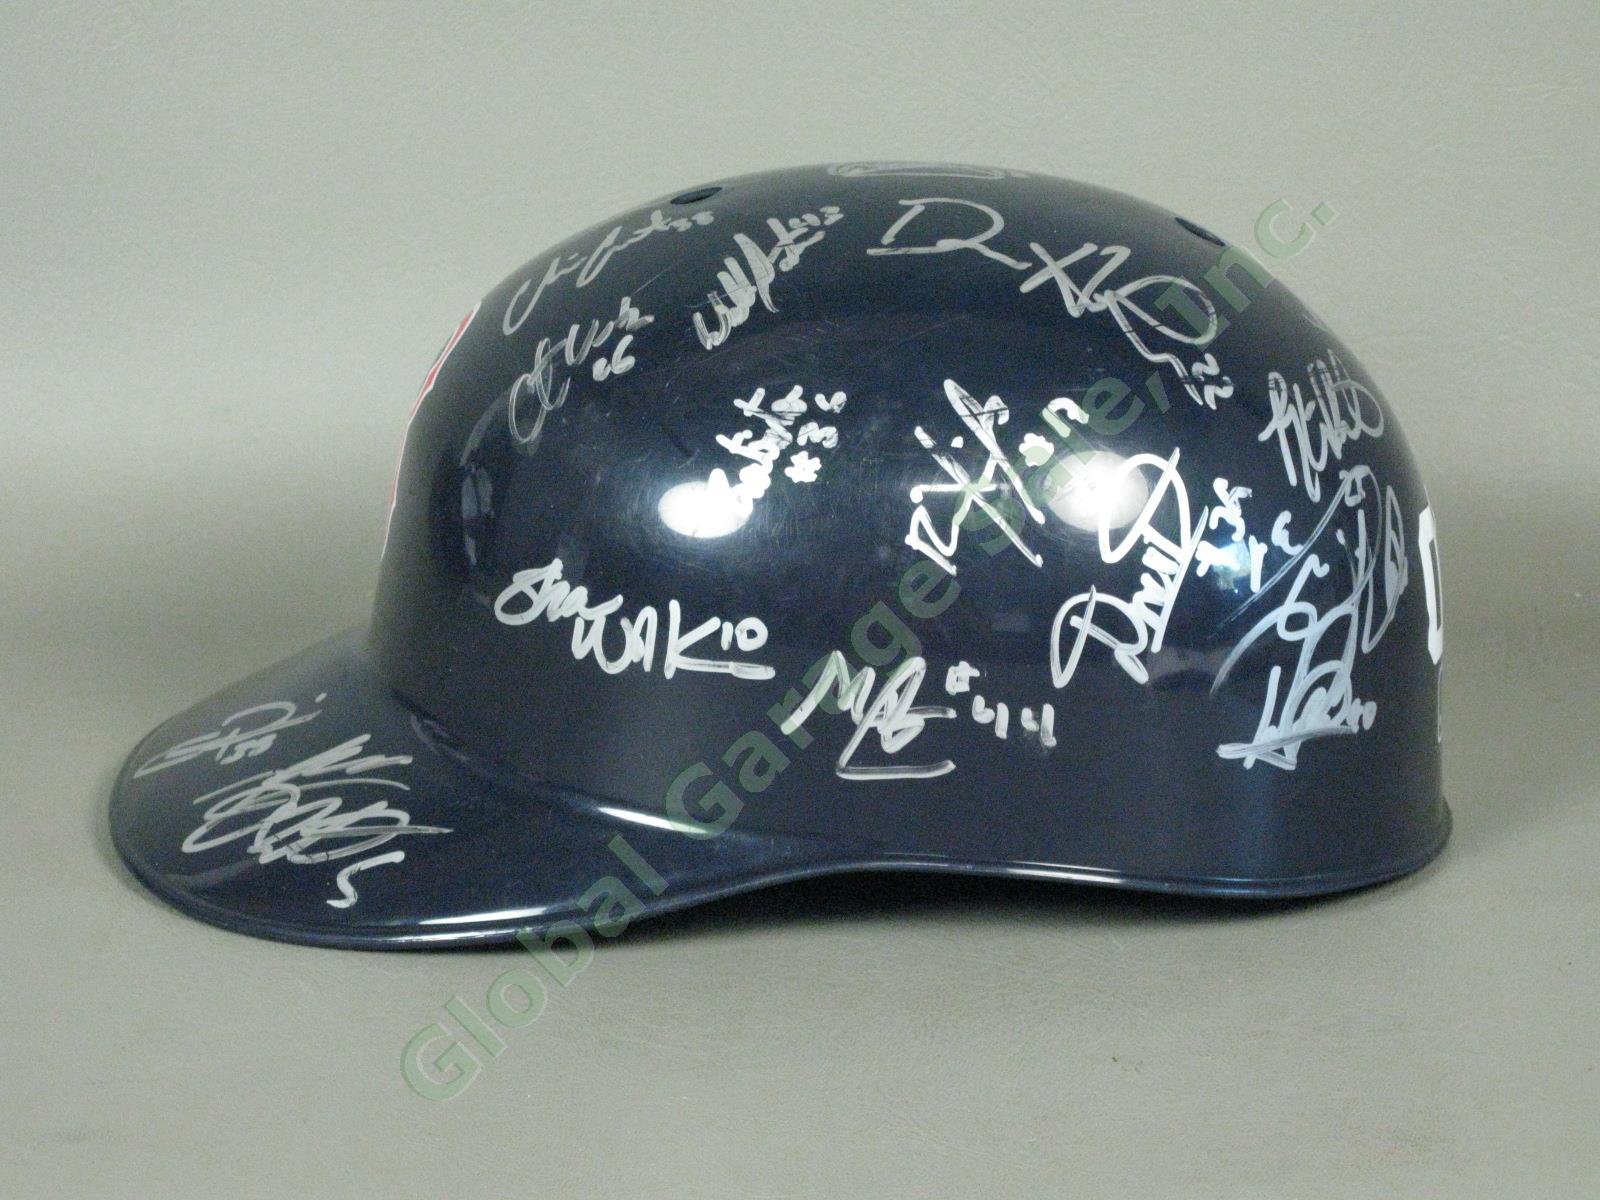 2009 Lowell Spinners Team Signed Baseball Helmet MiLB MLB NYPL Boston Red Sox NR 3